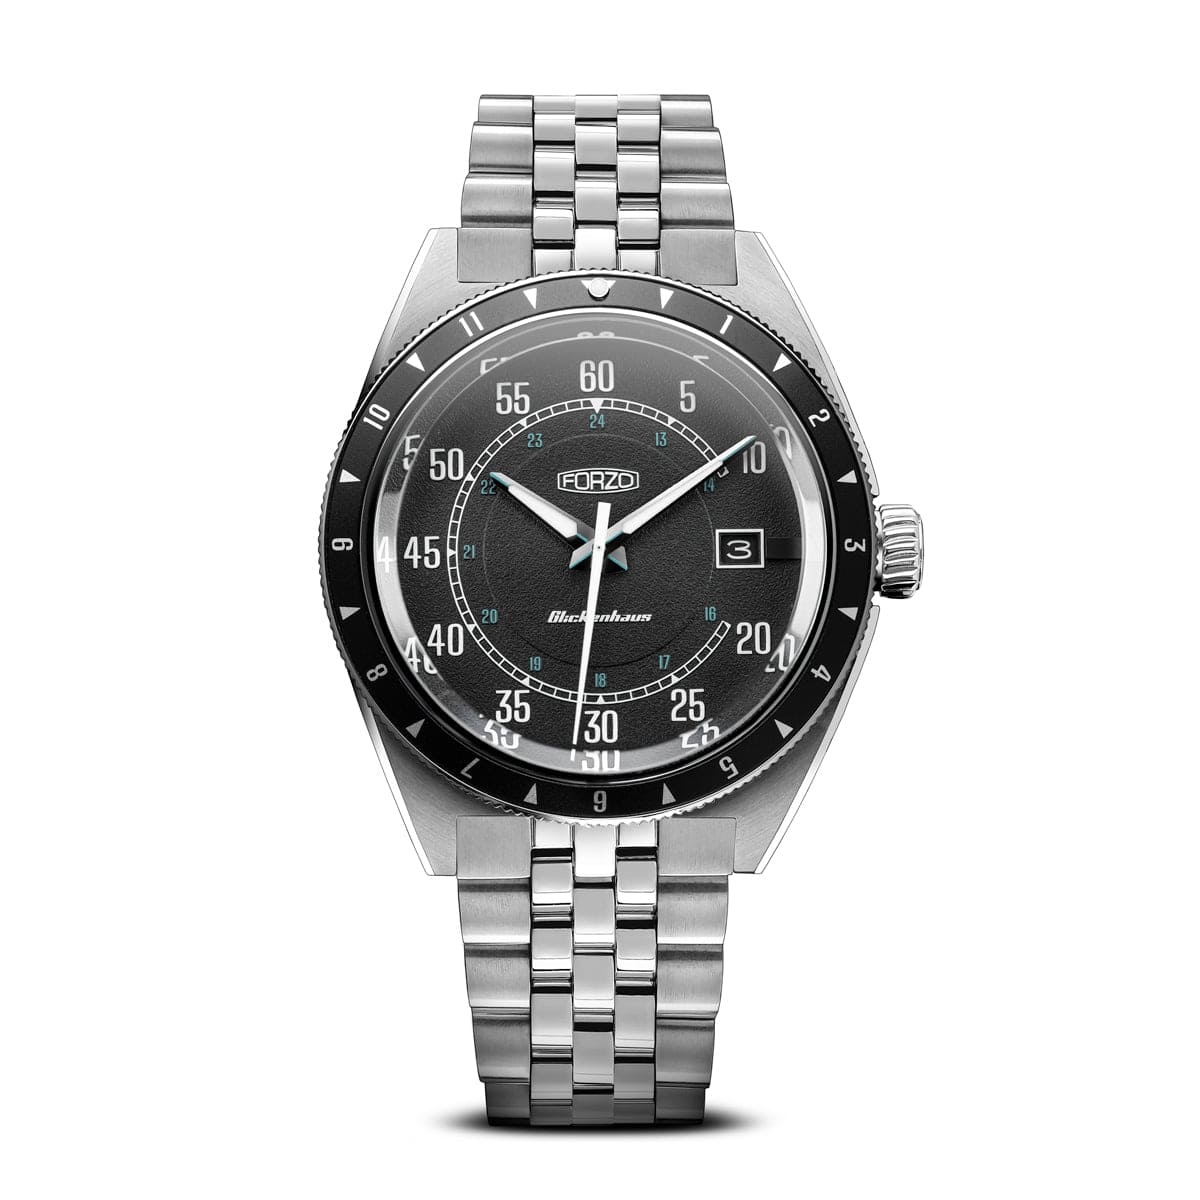 FORZO x Glickenhaus Automatic Watch - Black & Blue Dial - LIKE NEW